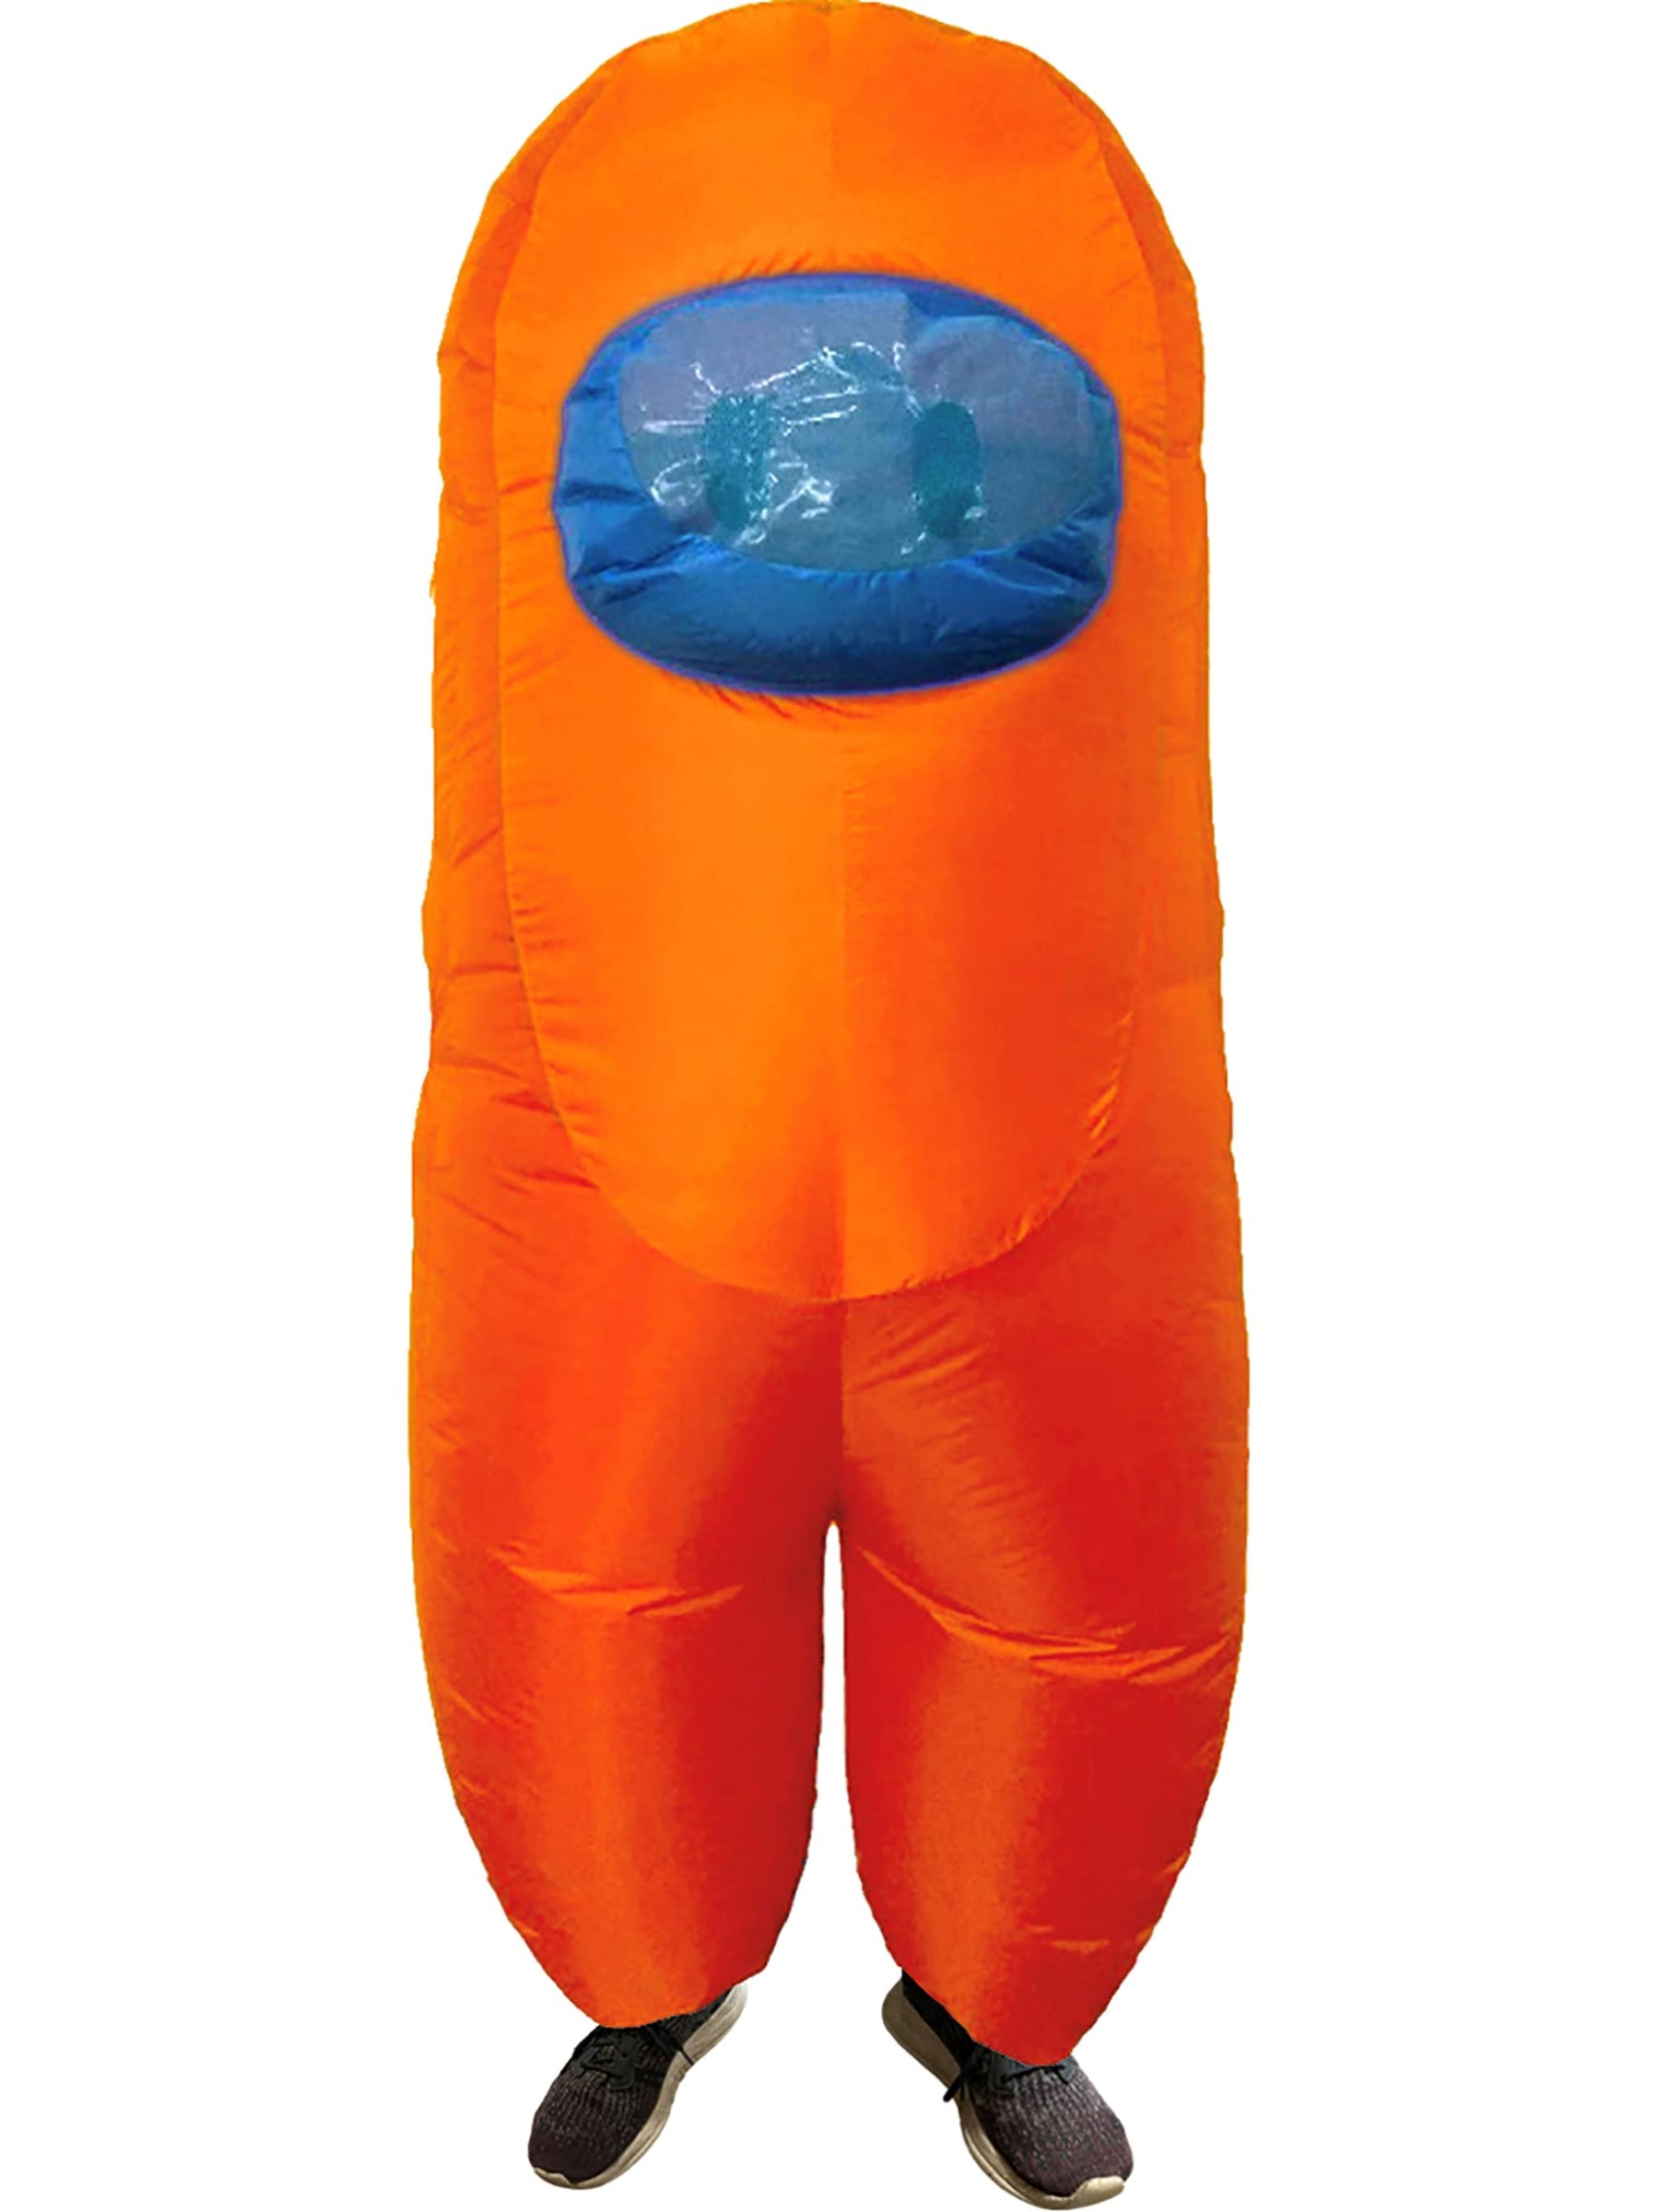 Orange Imposter Inflatable Child Costume | Standard